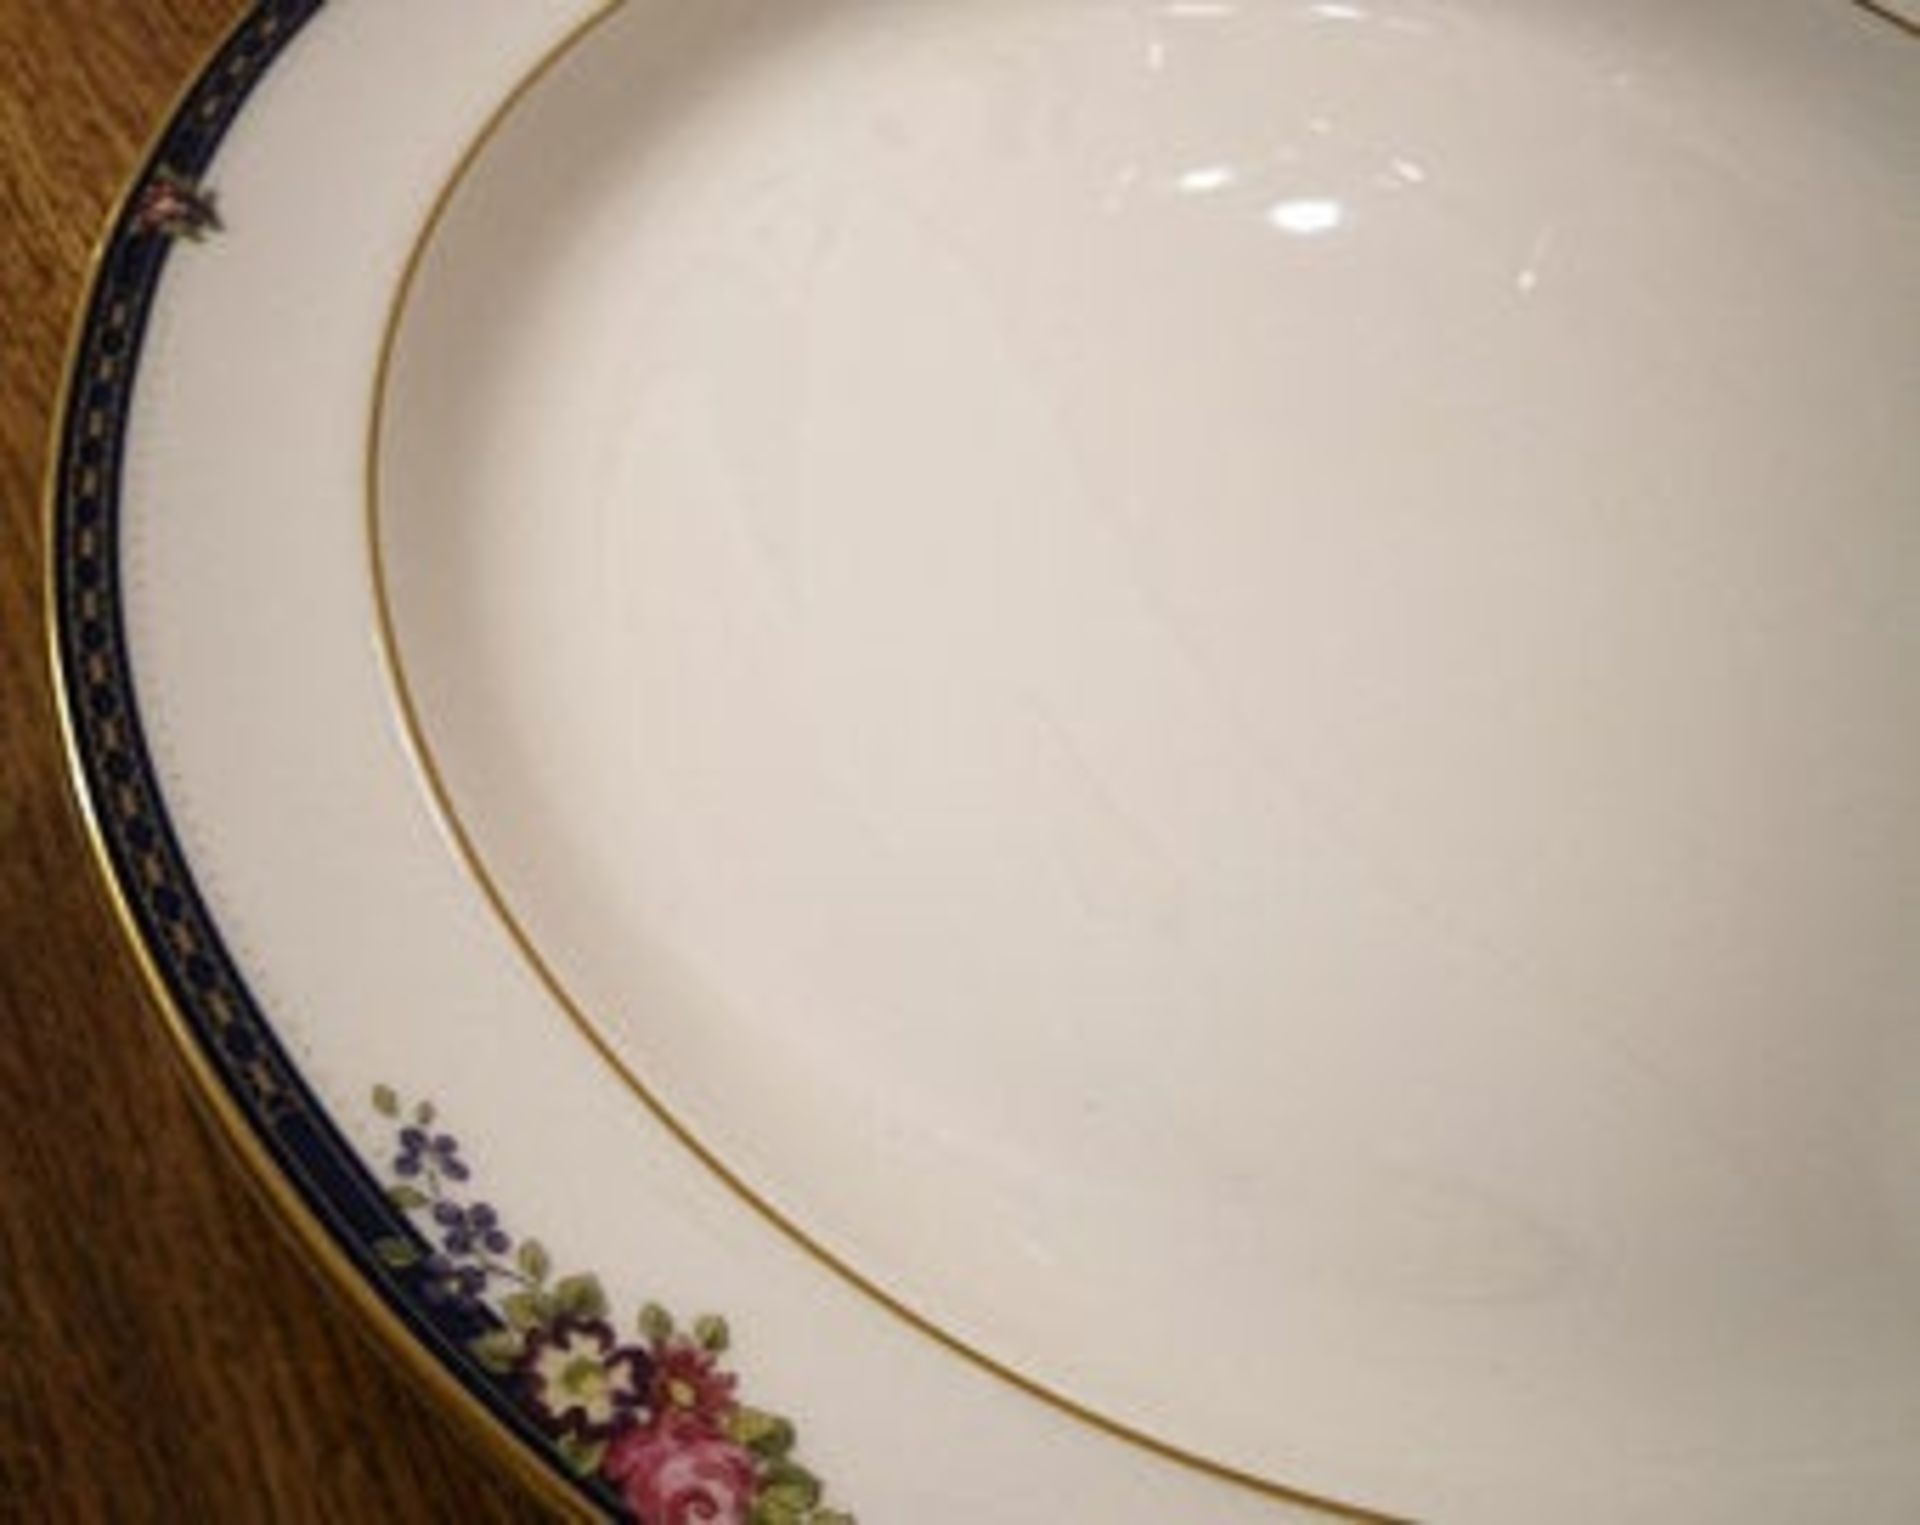 Royal Doulton large serving plate Centennial Rose pattern - Image 2 of 4